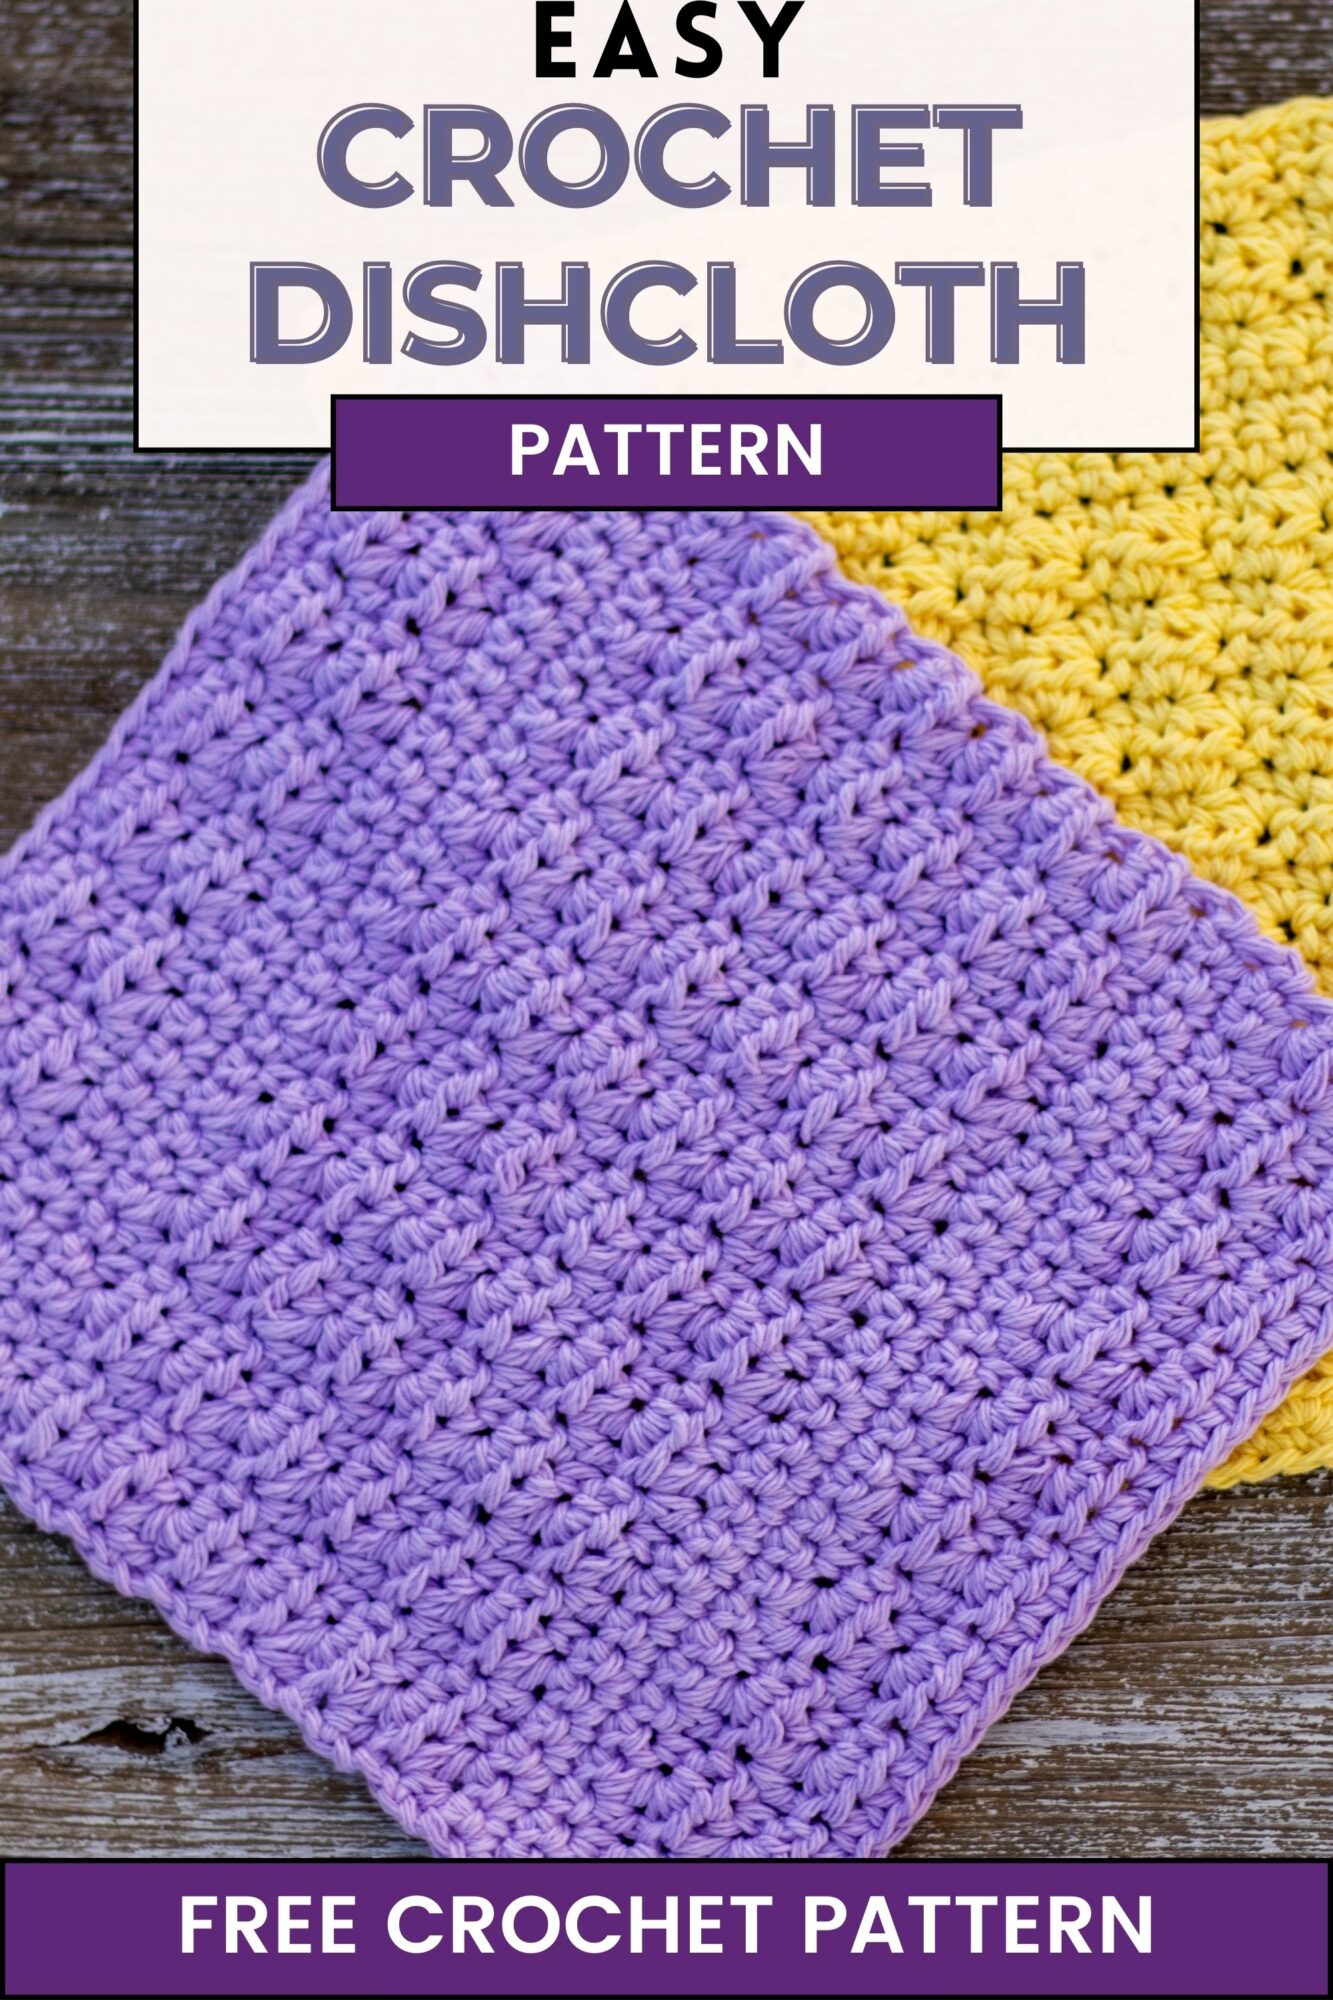 Cloudy Days Crochet Dishcloth Pattern - First The Coffee Crochet